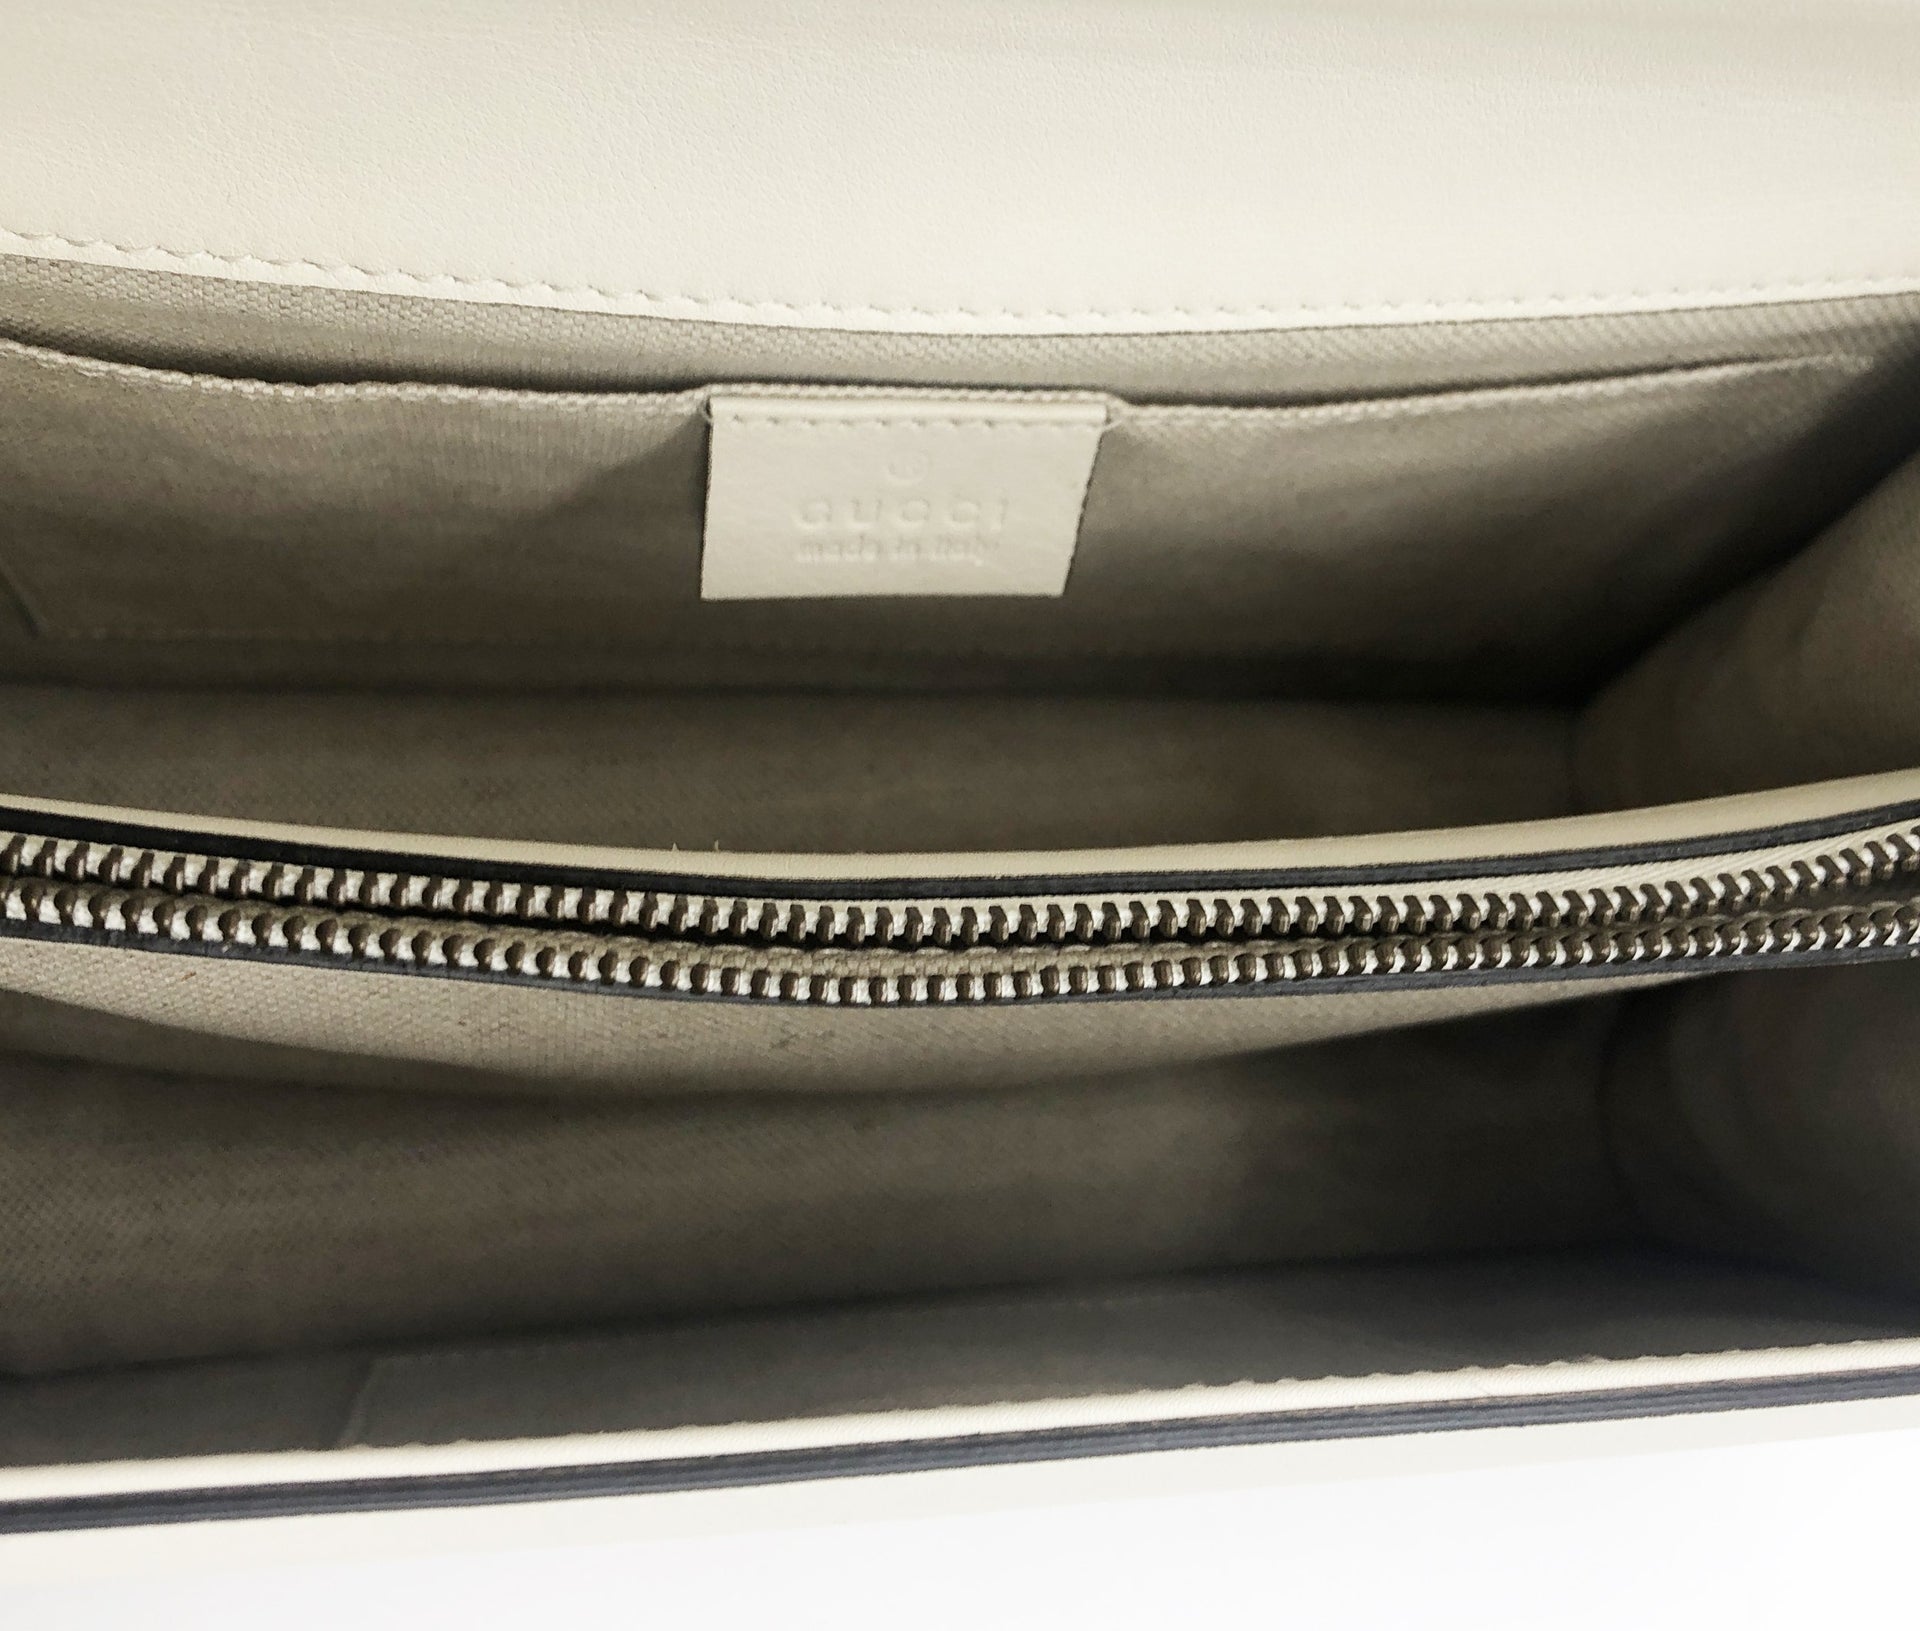 Gucci Dionysus medium top handle bag